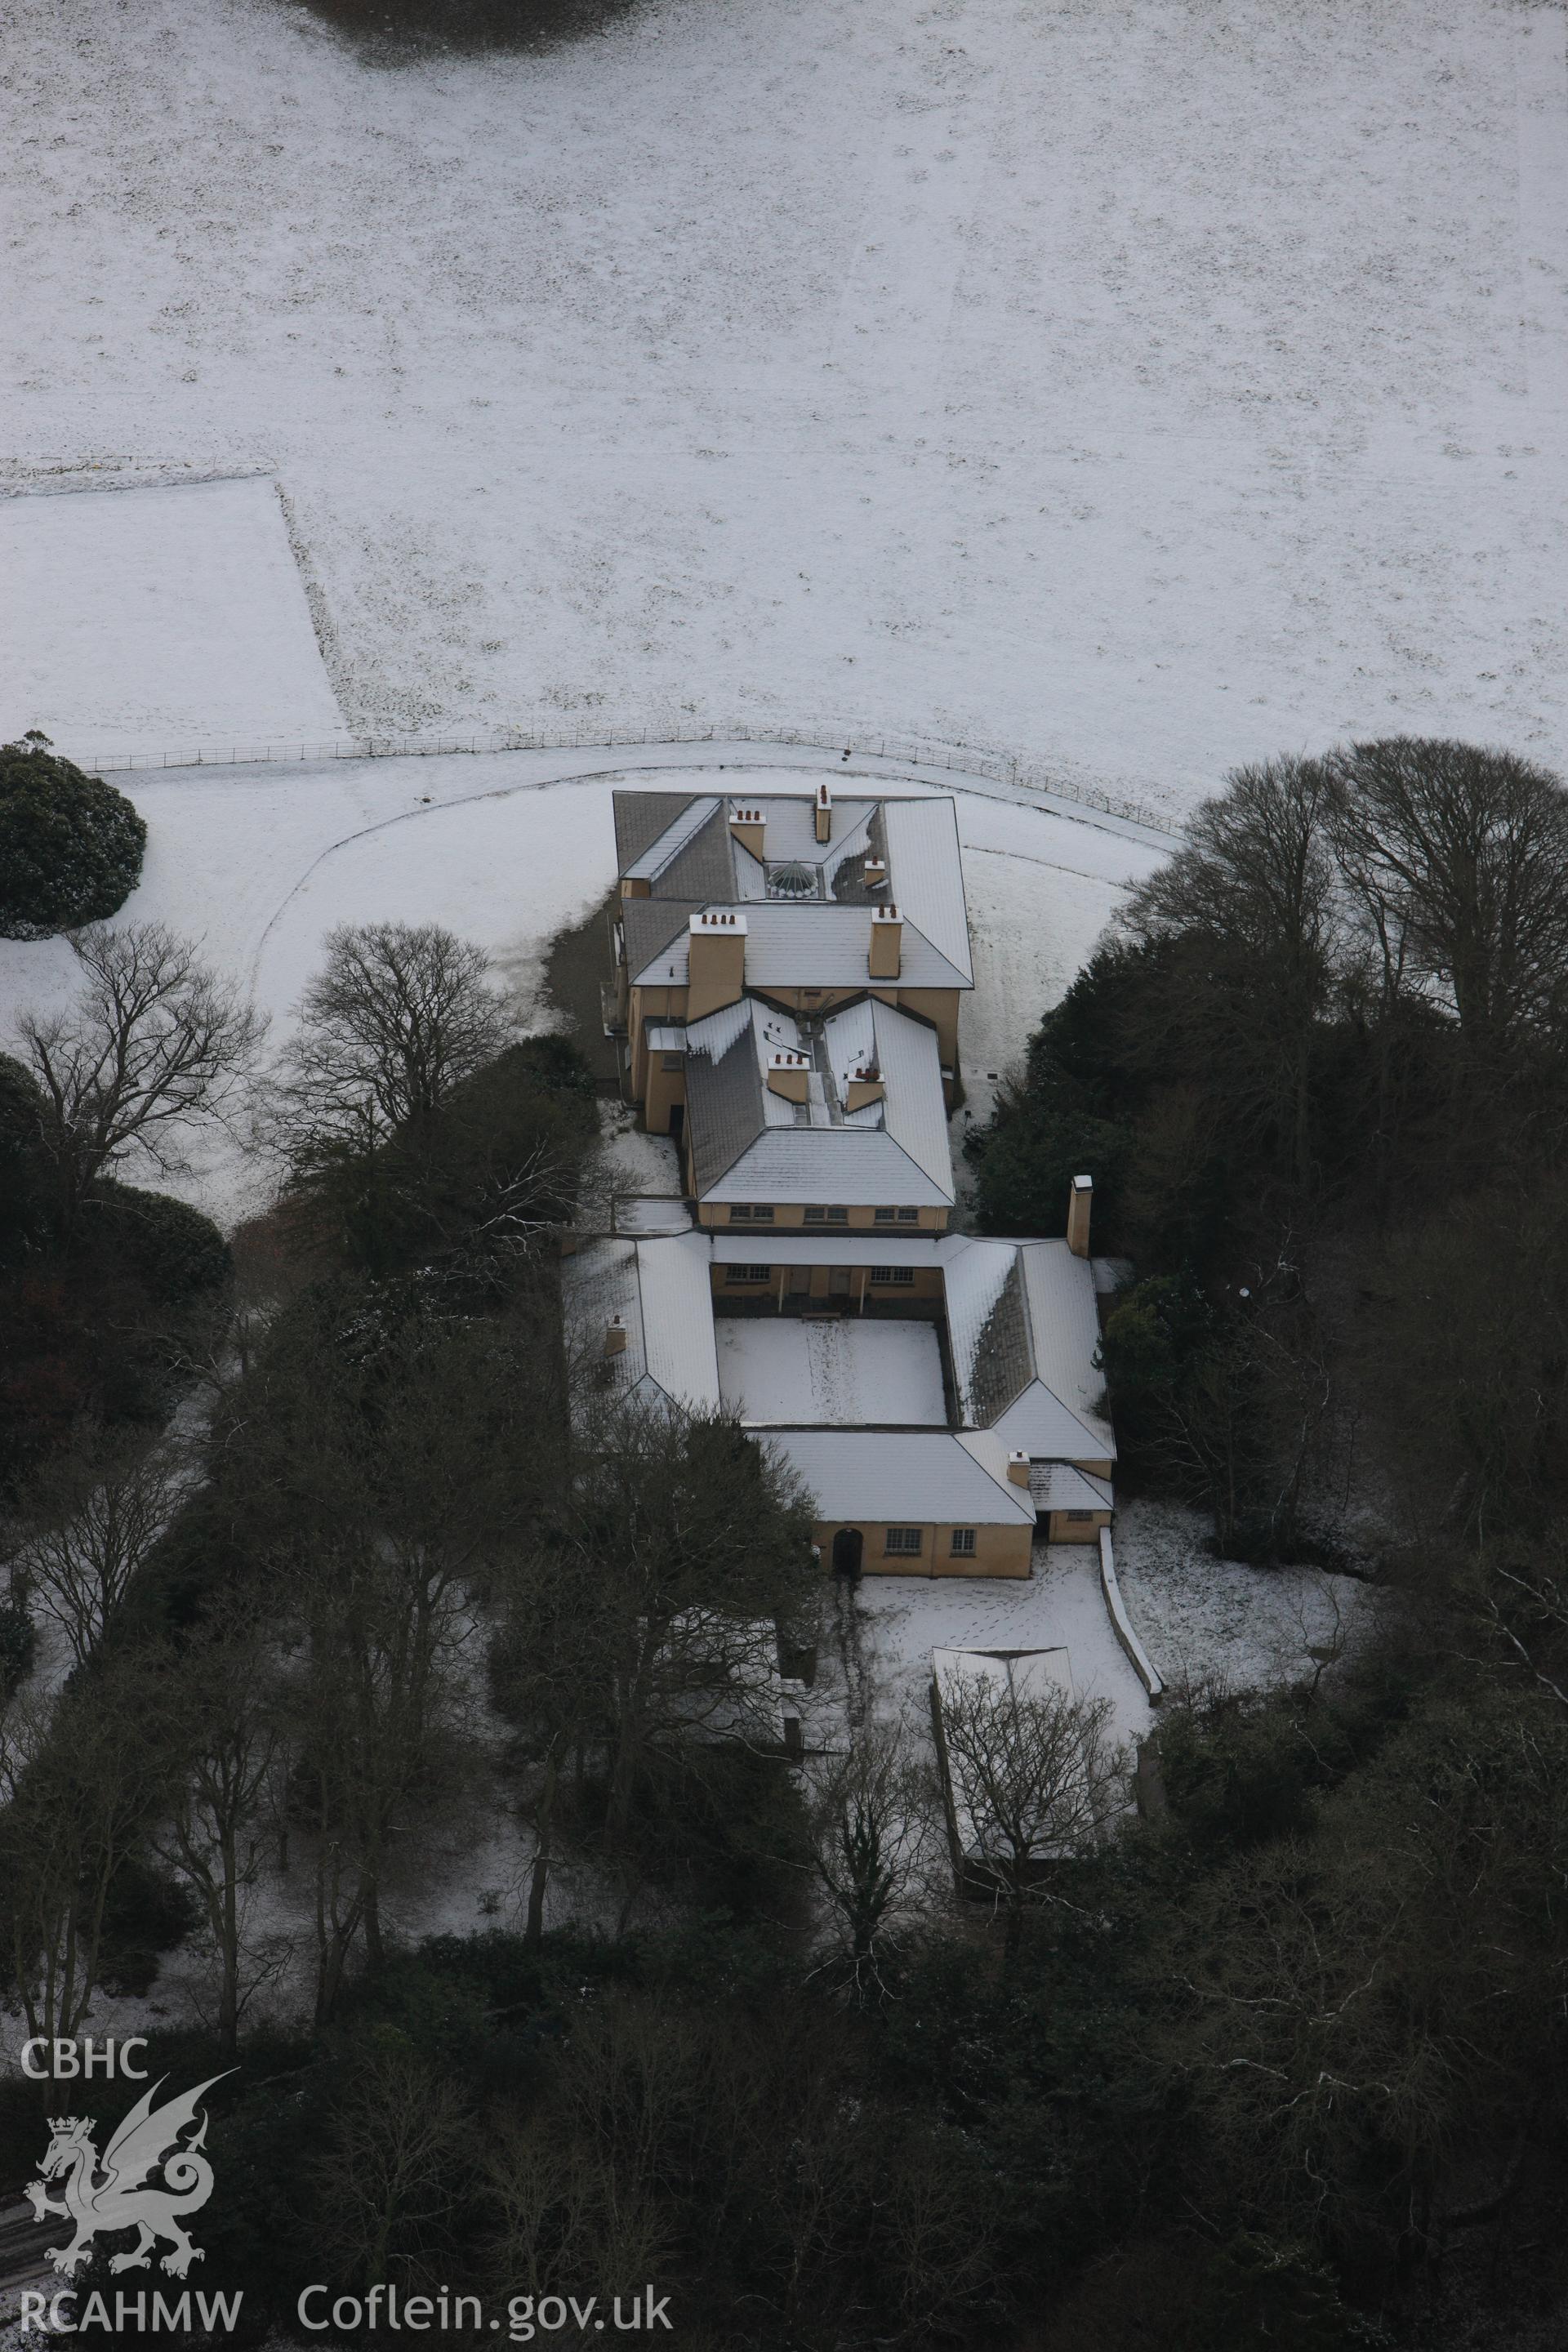 RCAHMW colour oblique photograph of Llanerchaeron House. Taken by Toby Driver on 02/12/2010.